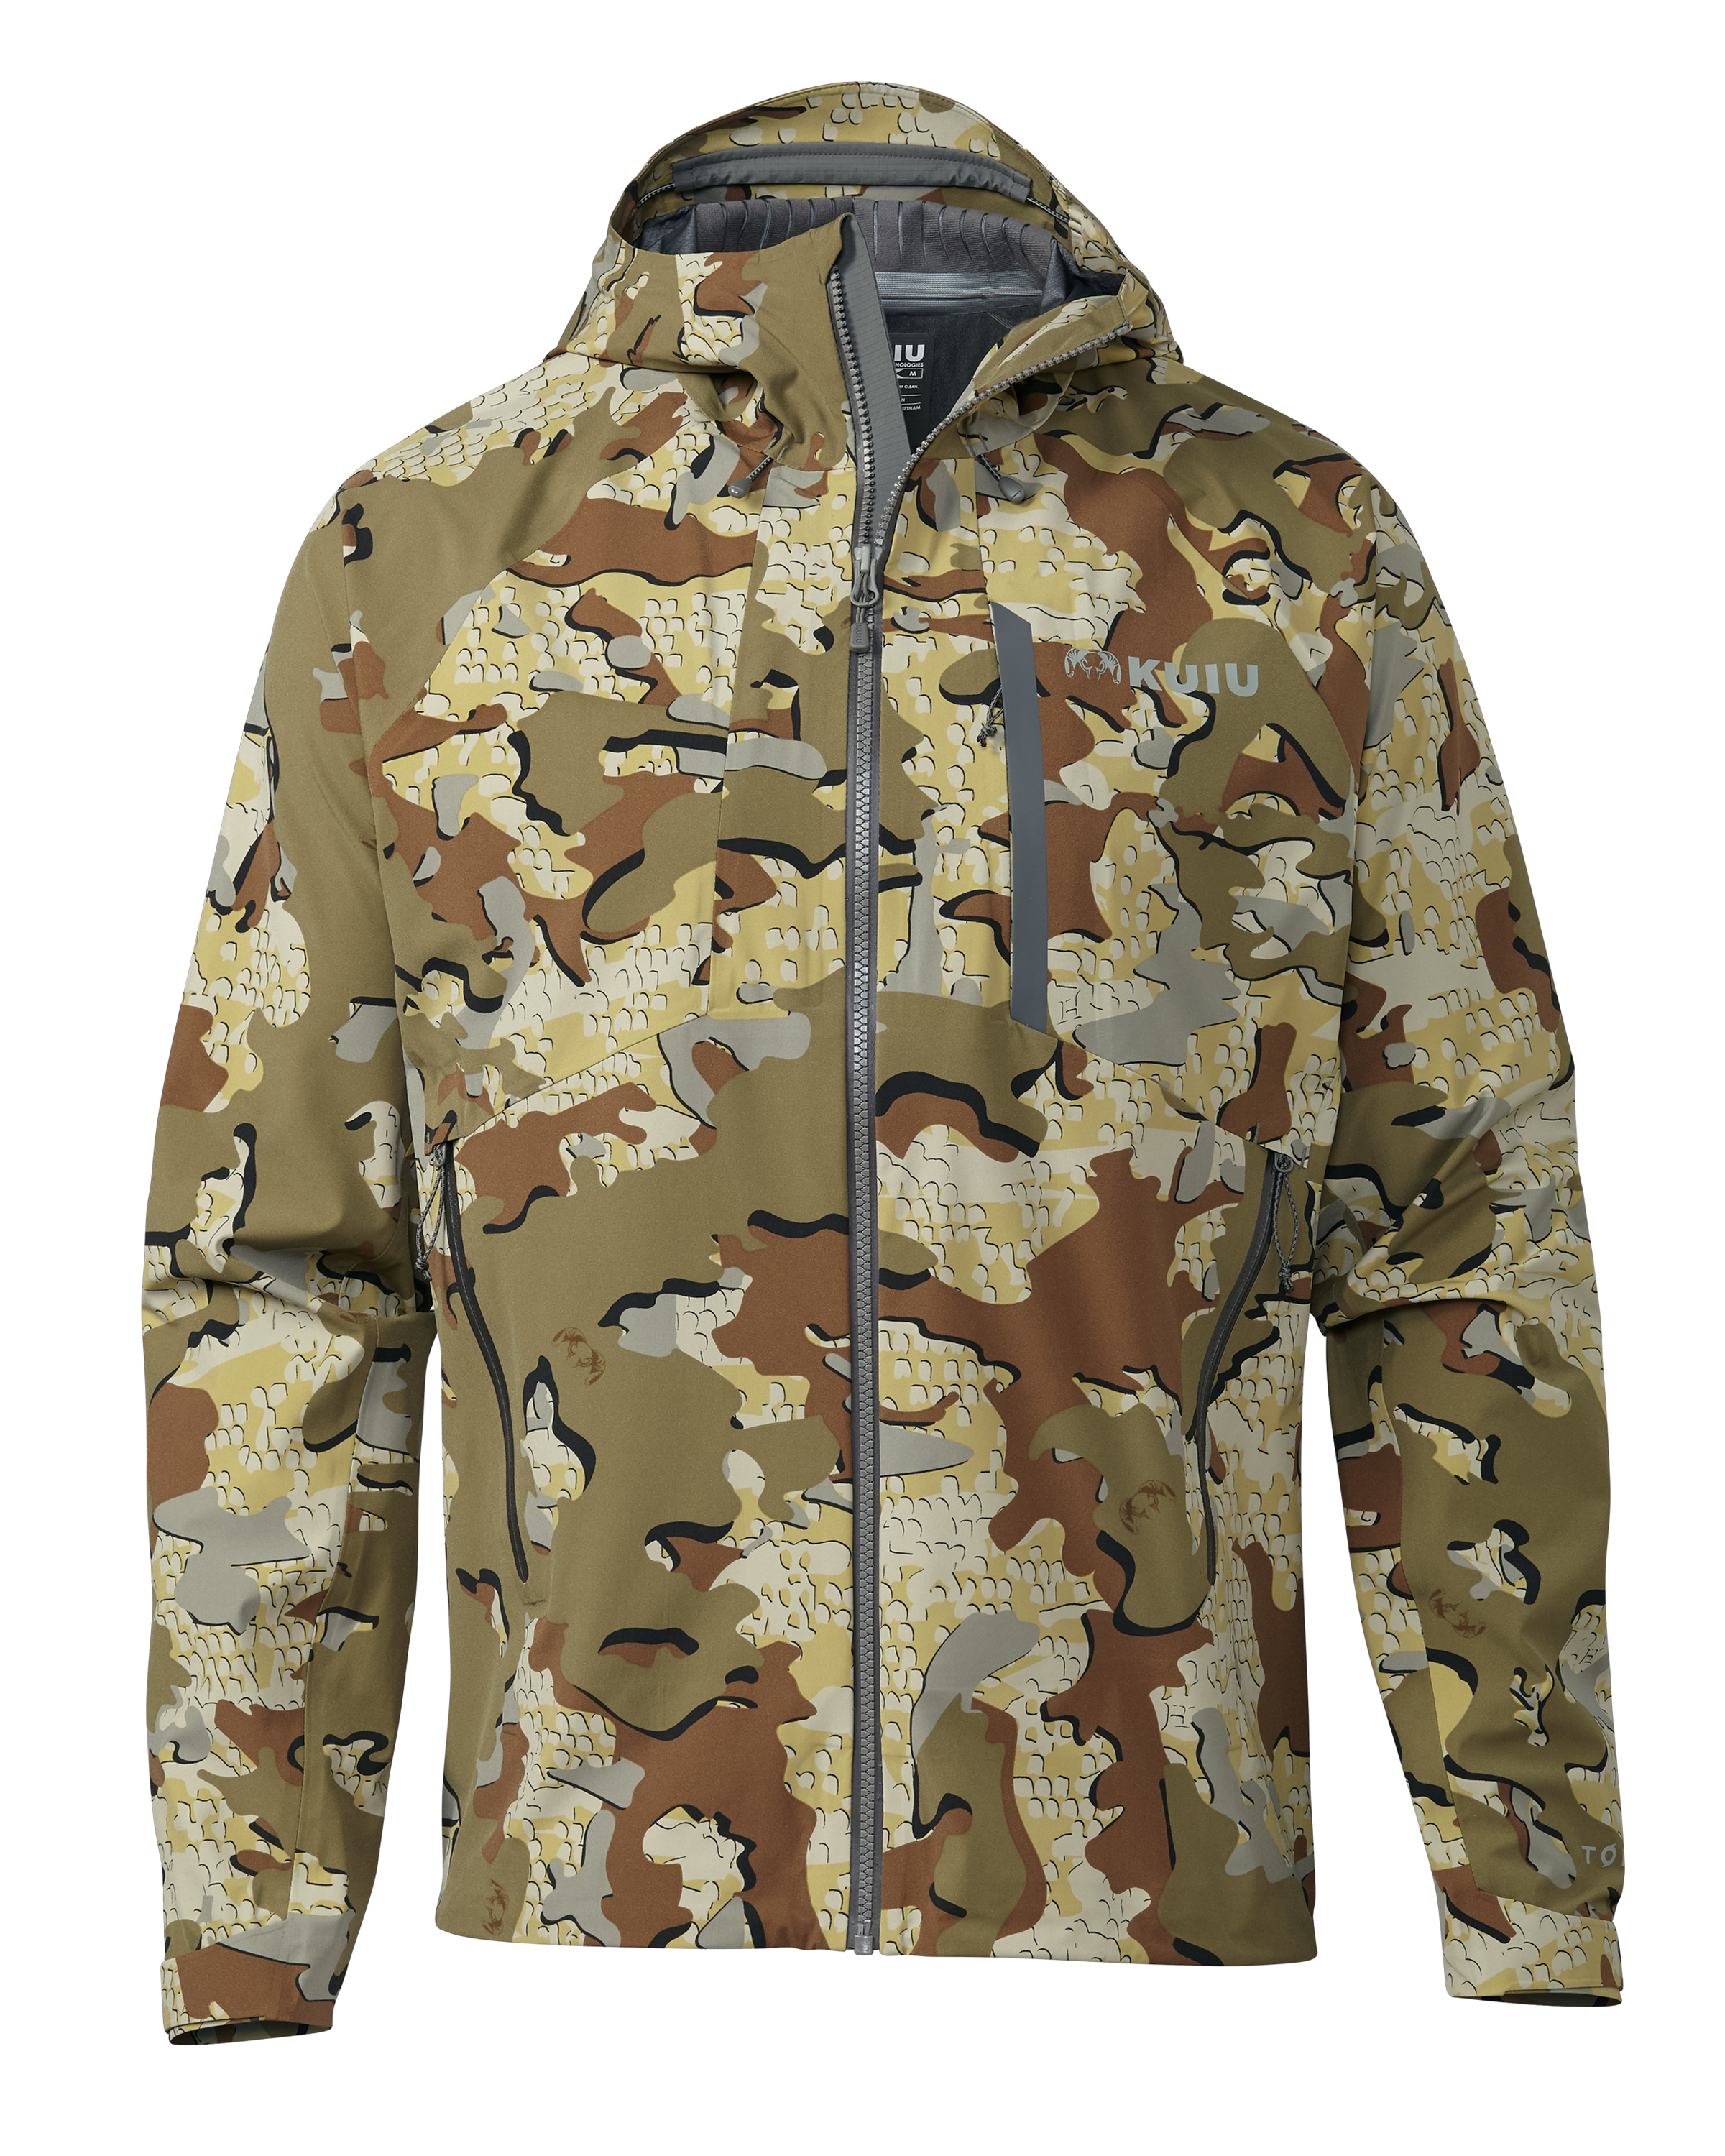 KUIU Chugach TR Rain Hunting Jacket in Valo | Size 3XL